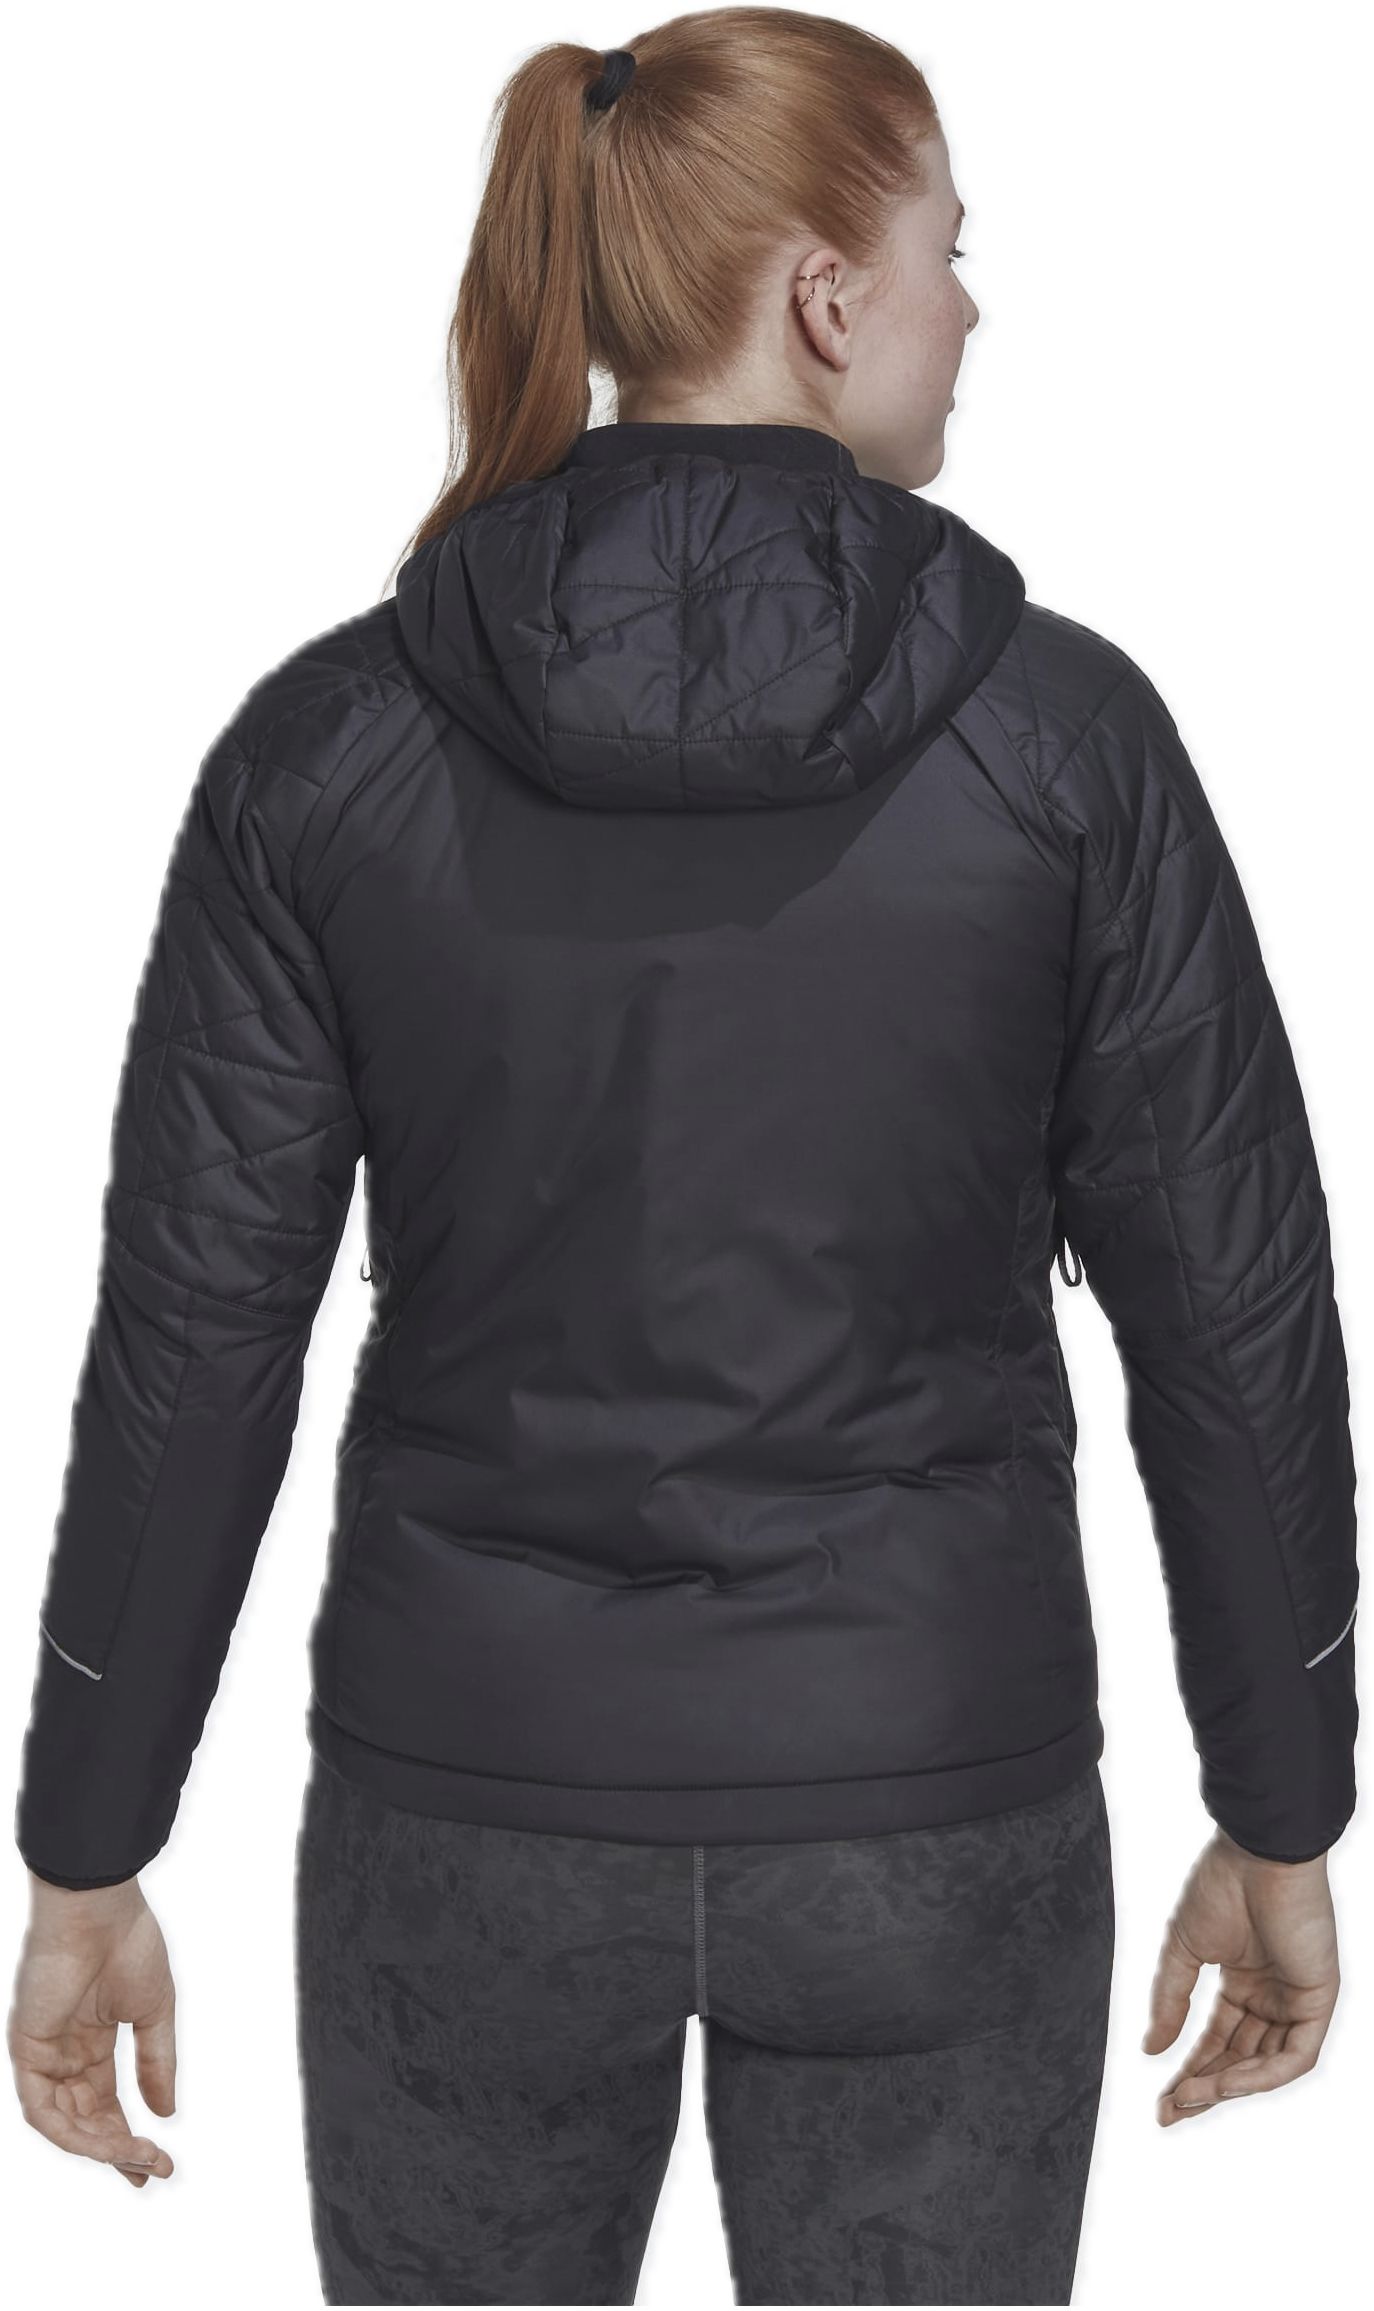 ADIDAS, Terrex Multi Insulated Hooded Jacket